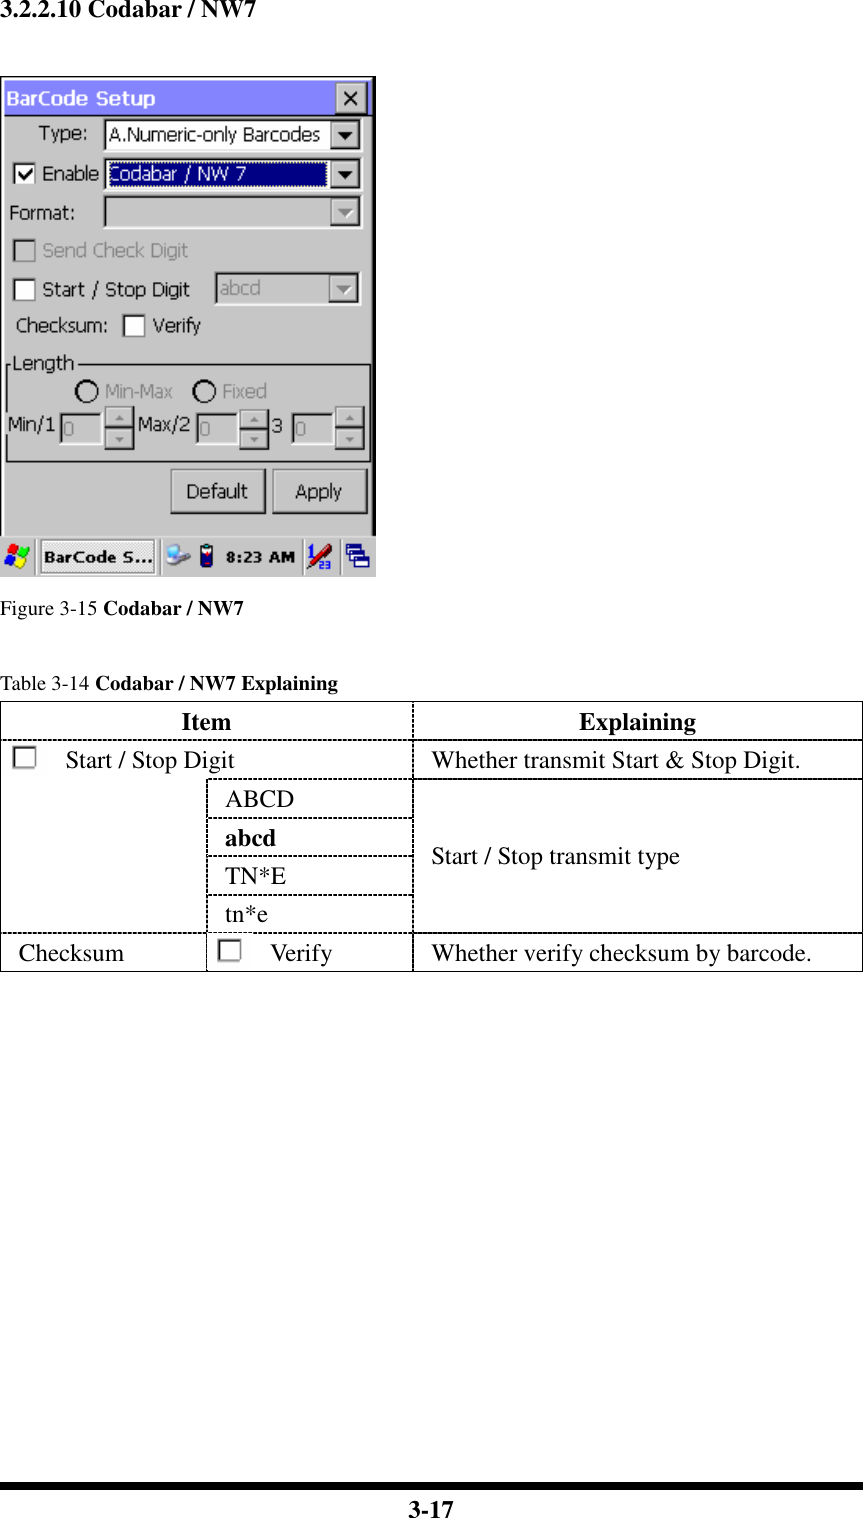  3-17 3.2.2.10 Codabar / NW7   Figure 3-15 Codabar / NW7  Table 3-14 Codabar / NW7 Explaining Item  Explaining Start / Stop Digit  Whether transmit Start &amp; Stop Digit. ABCD abcd   TN*E  tn*e Start / Stop transmit type Checksum  Verify  Whether verify checksum by barcode.             